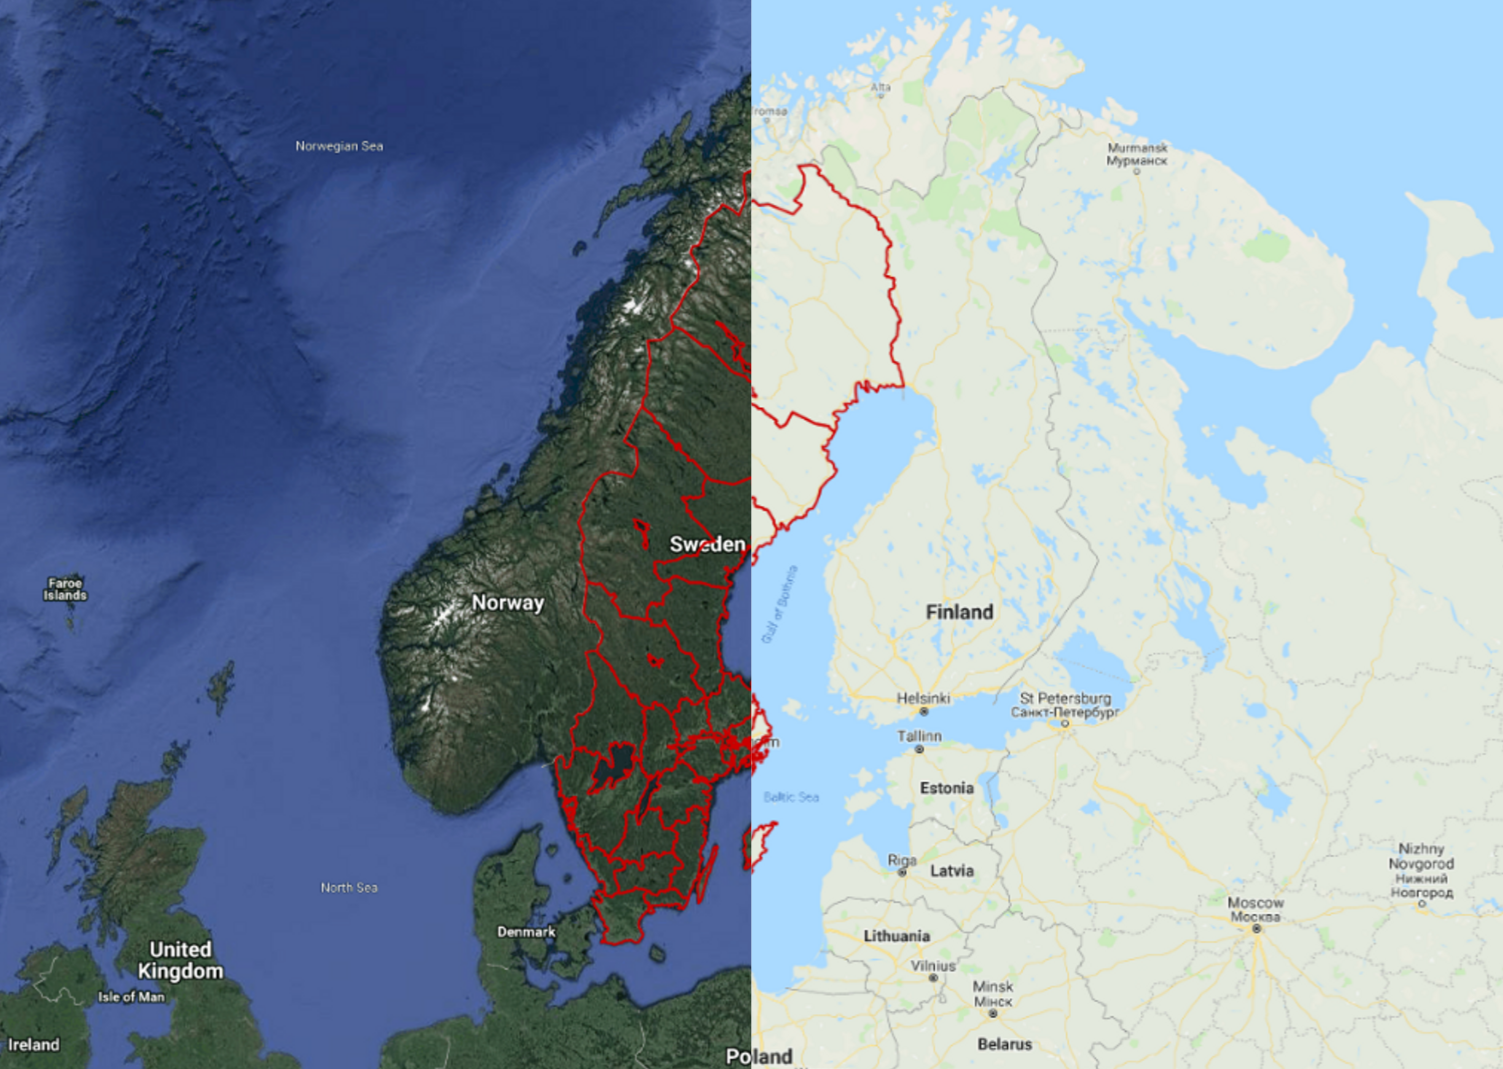 The Sweden County Boundaries